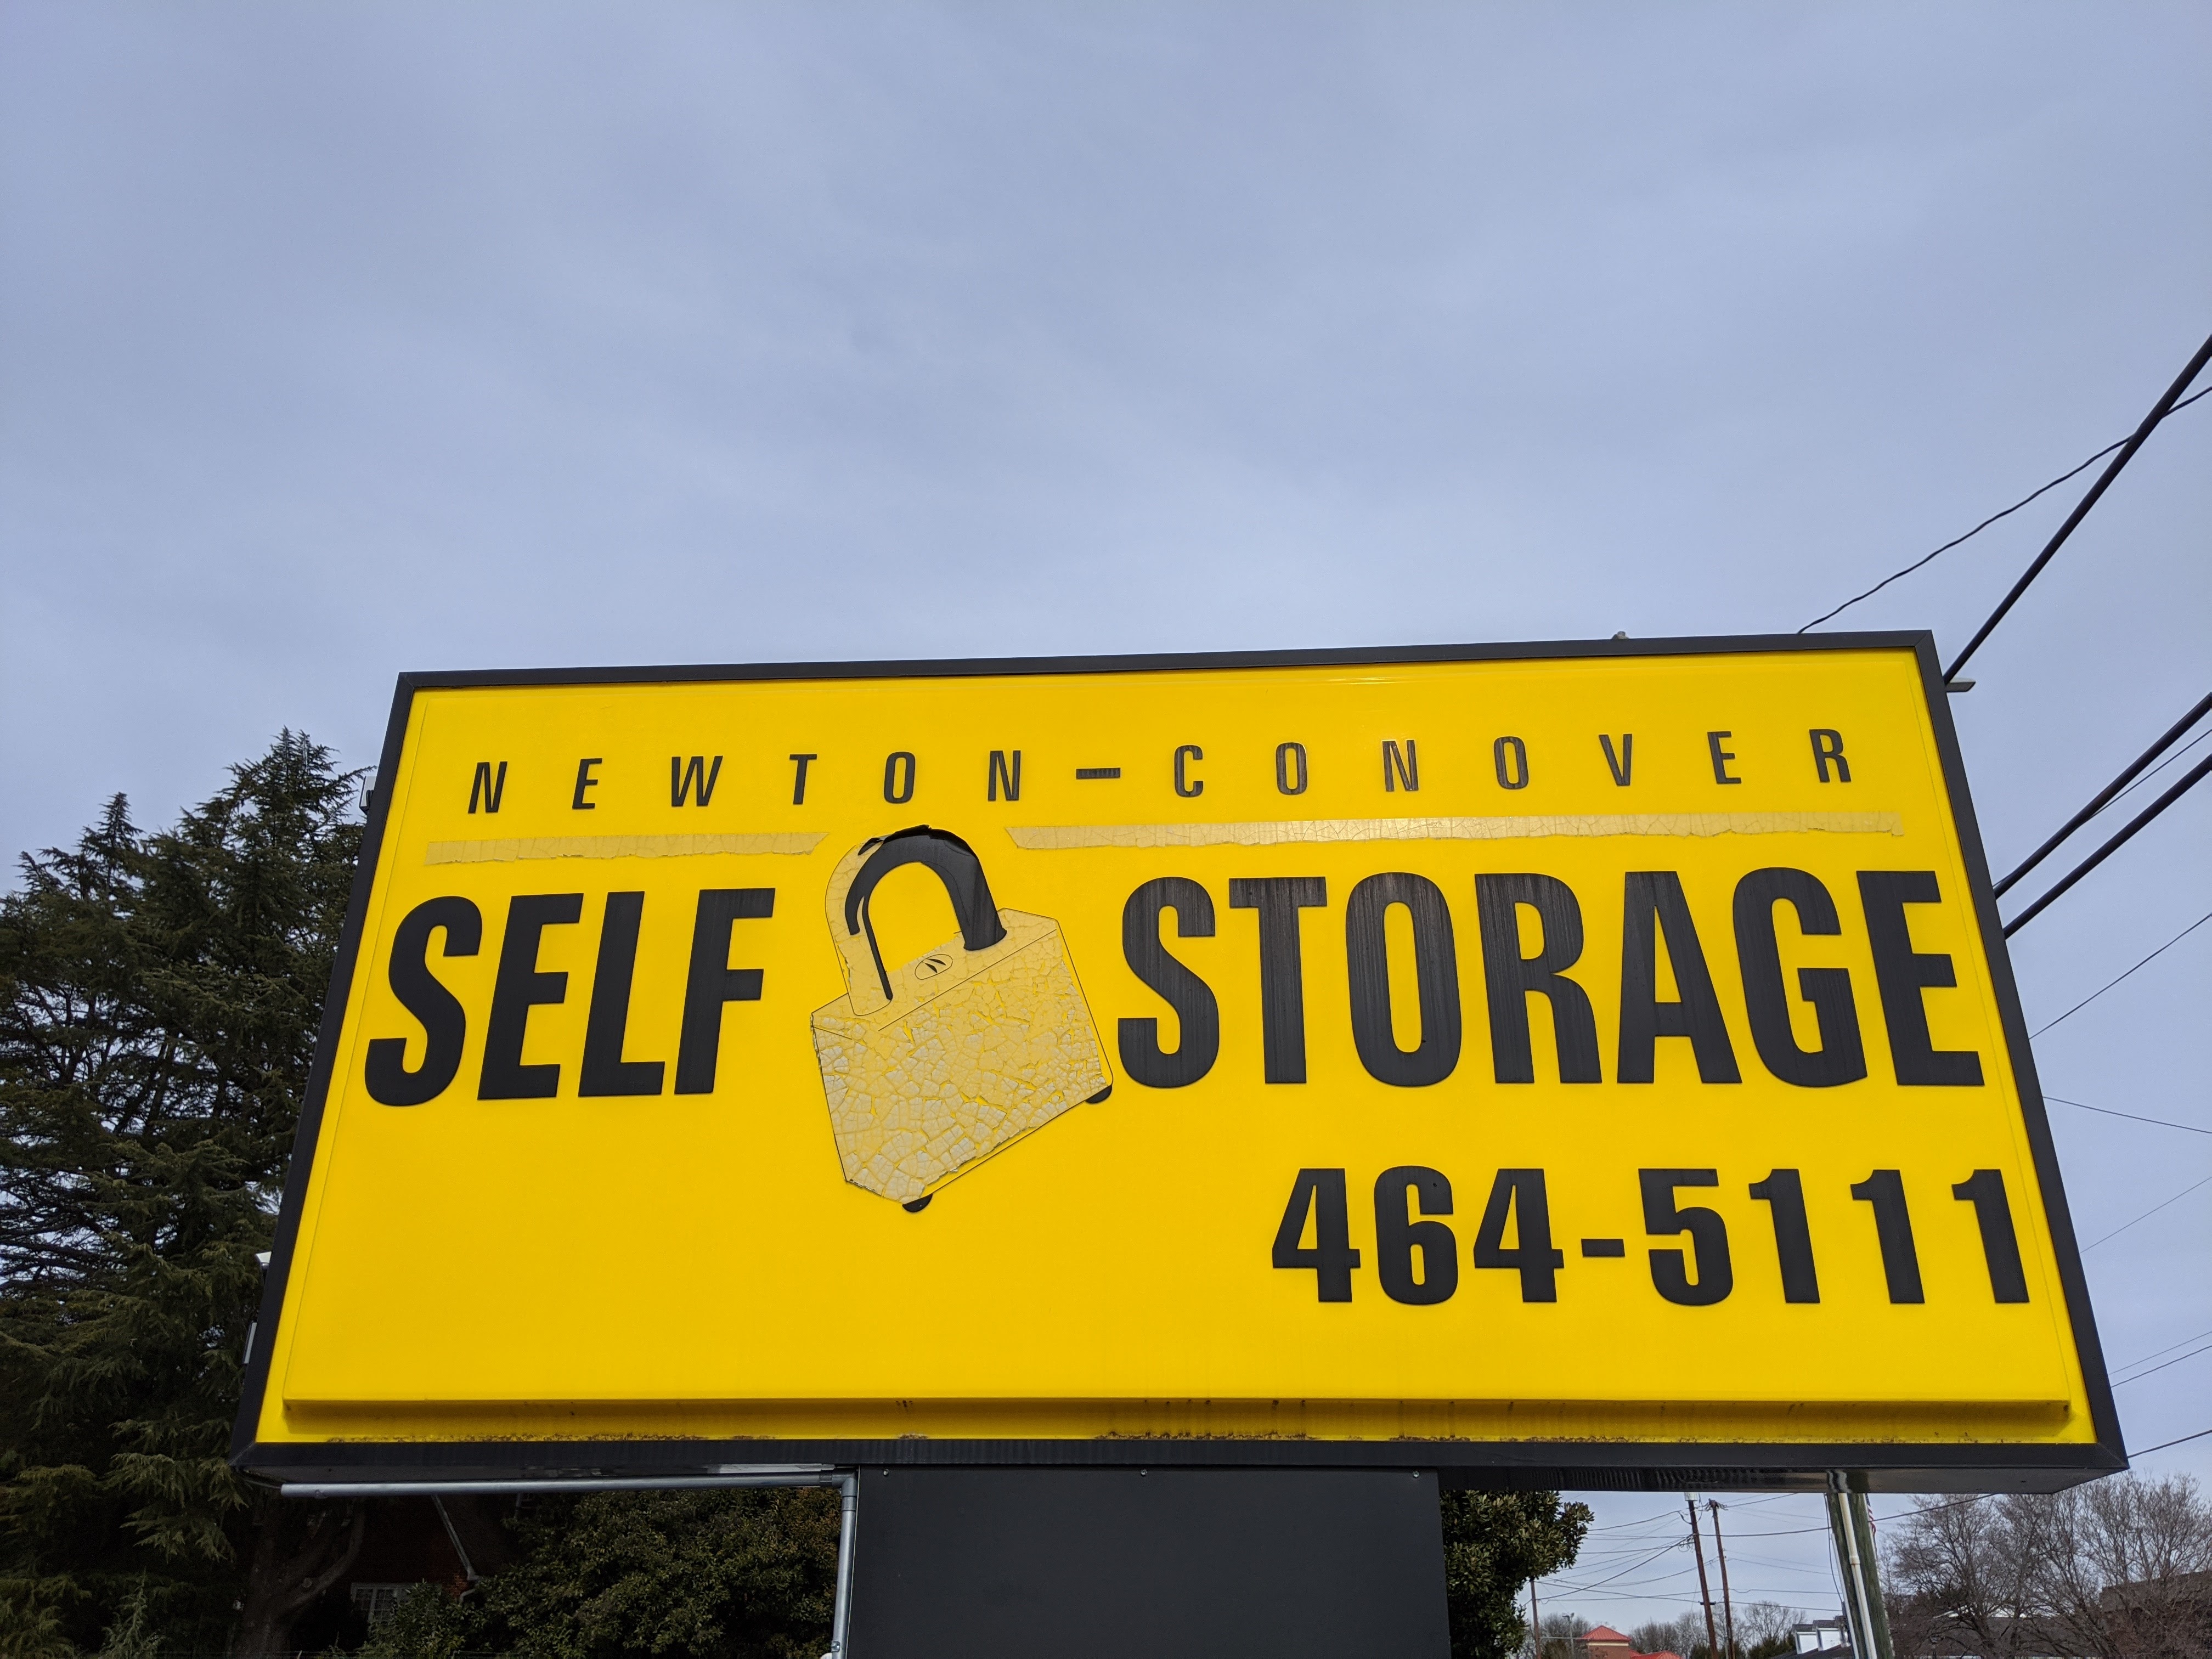 Newton Conover RV and Self Storage in Newton, NC 28658, self storage units